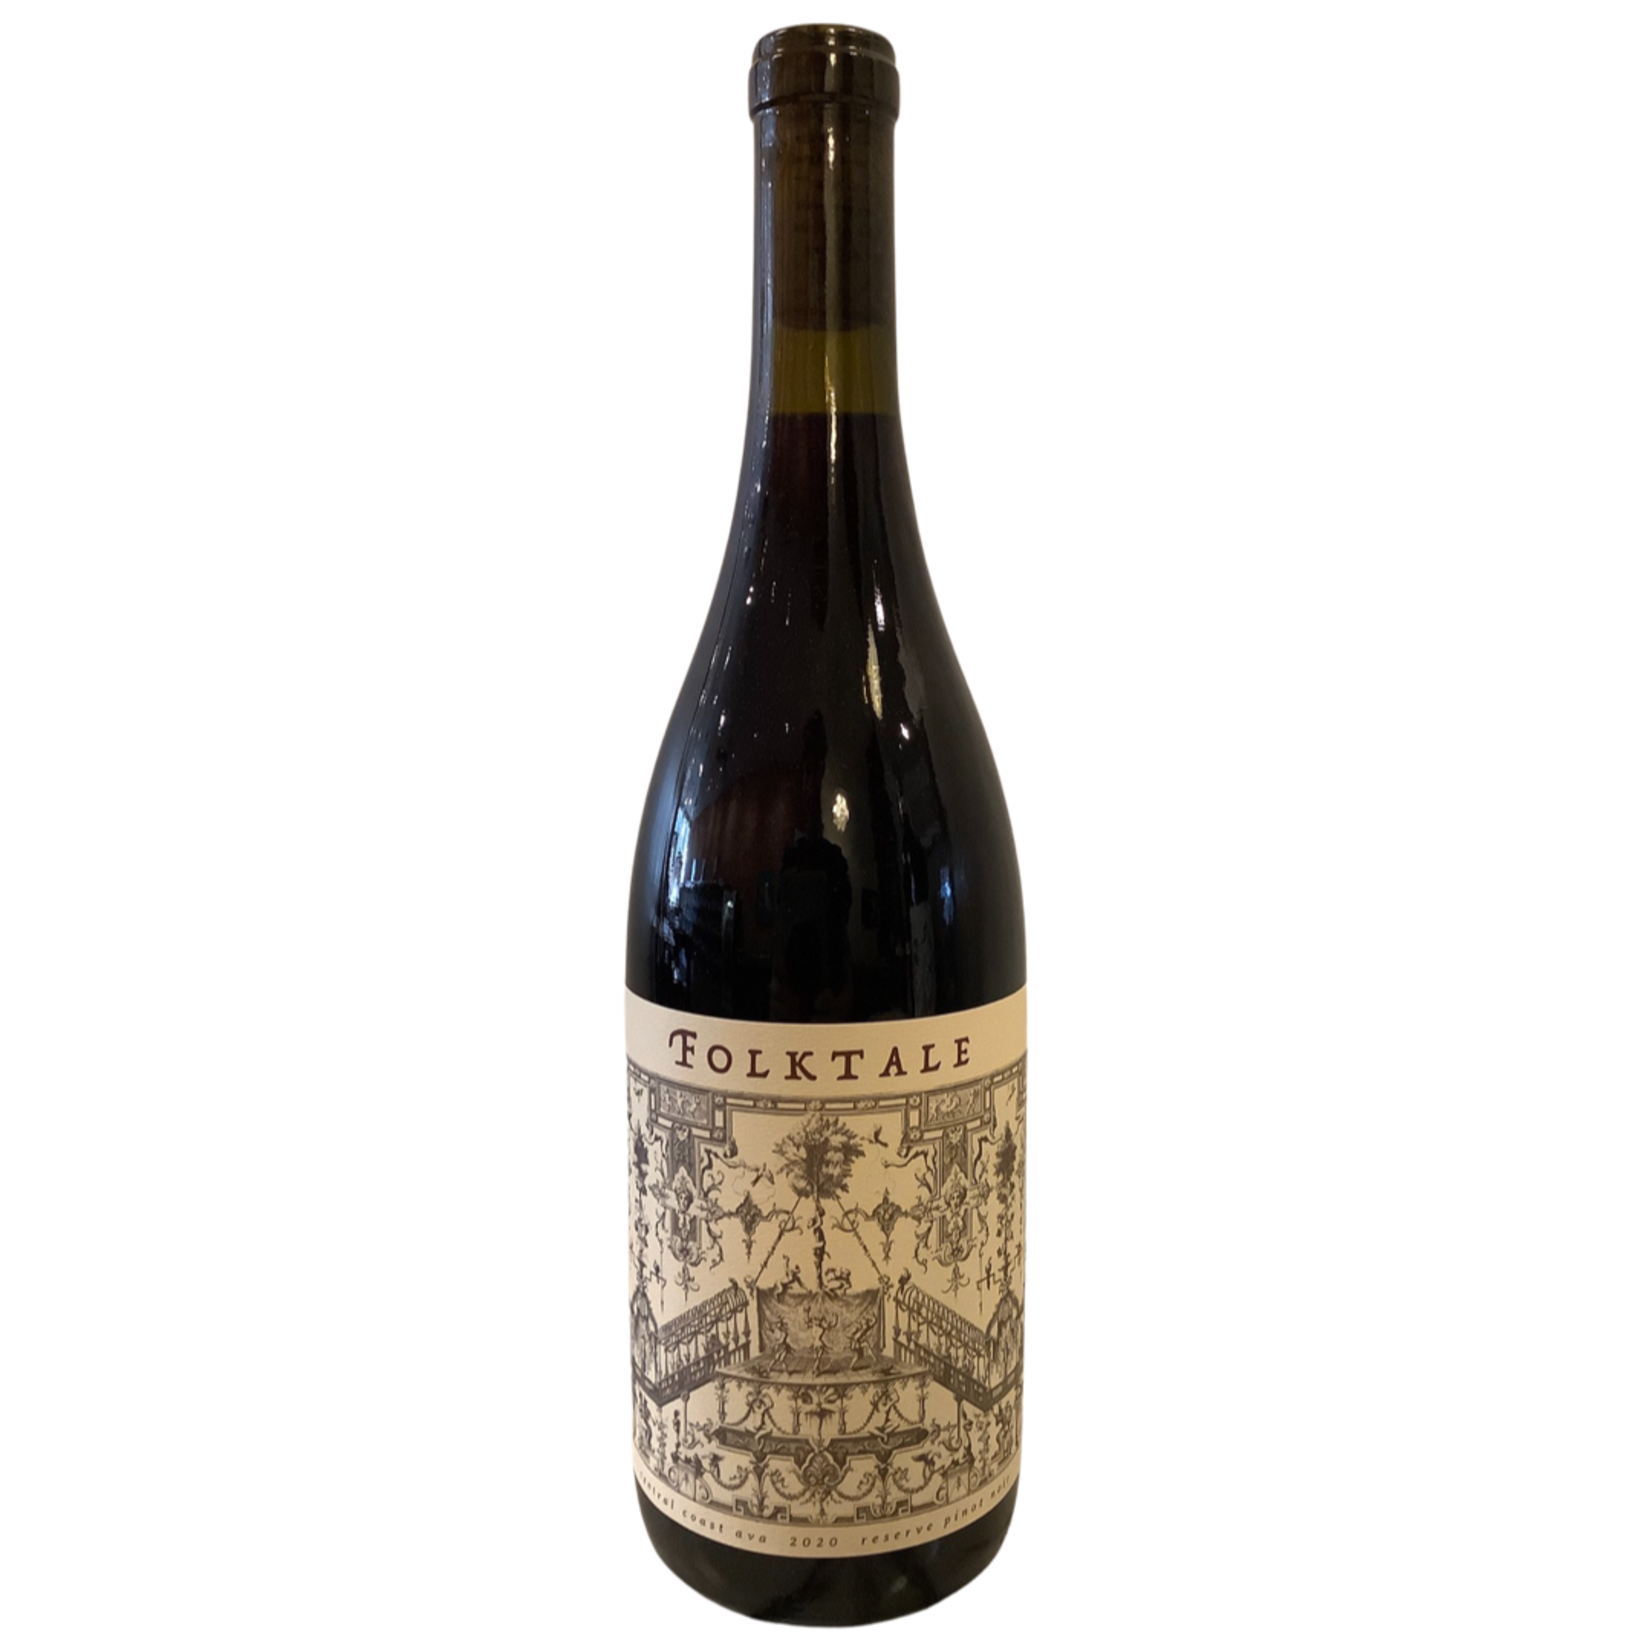 2020 Folktale "Reserve" Pinot Noir, Central Coast CA